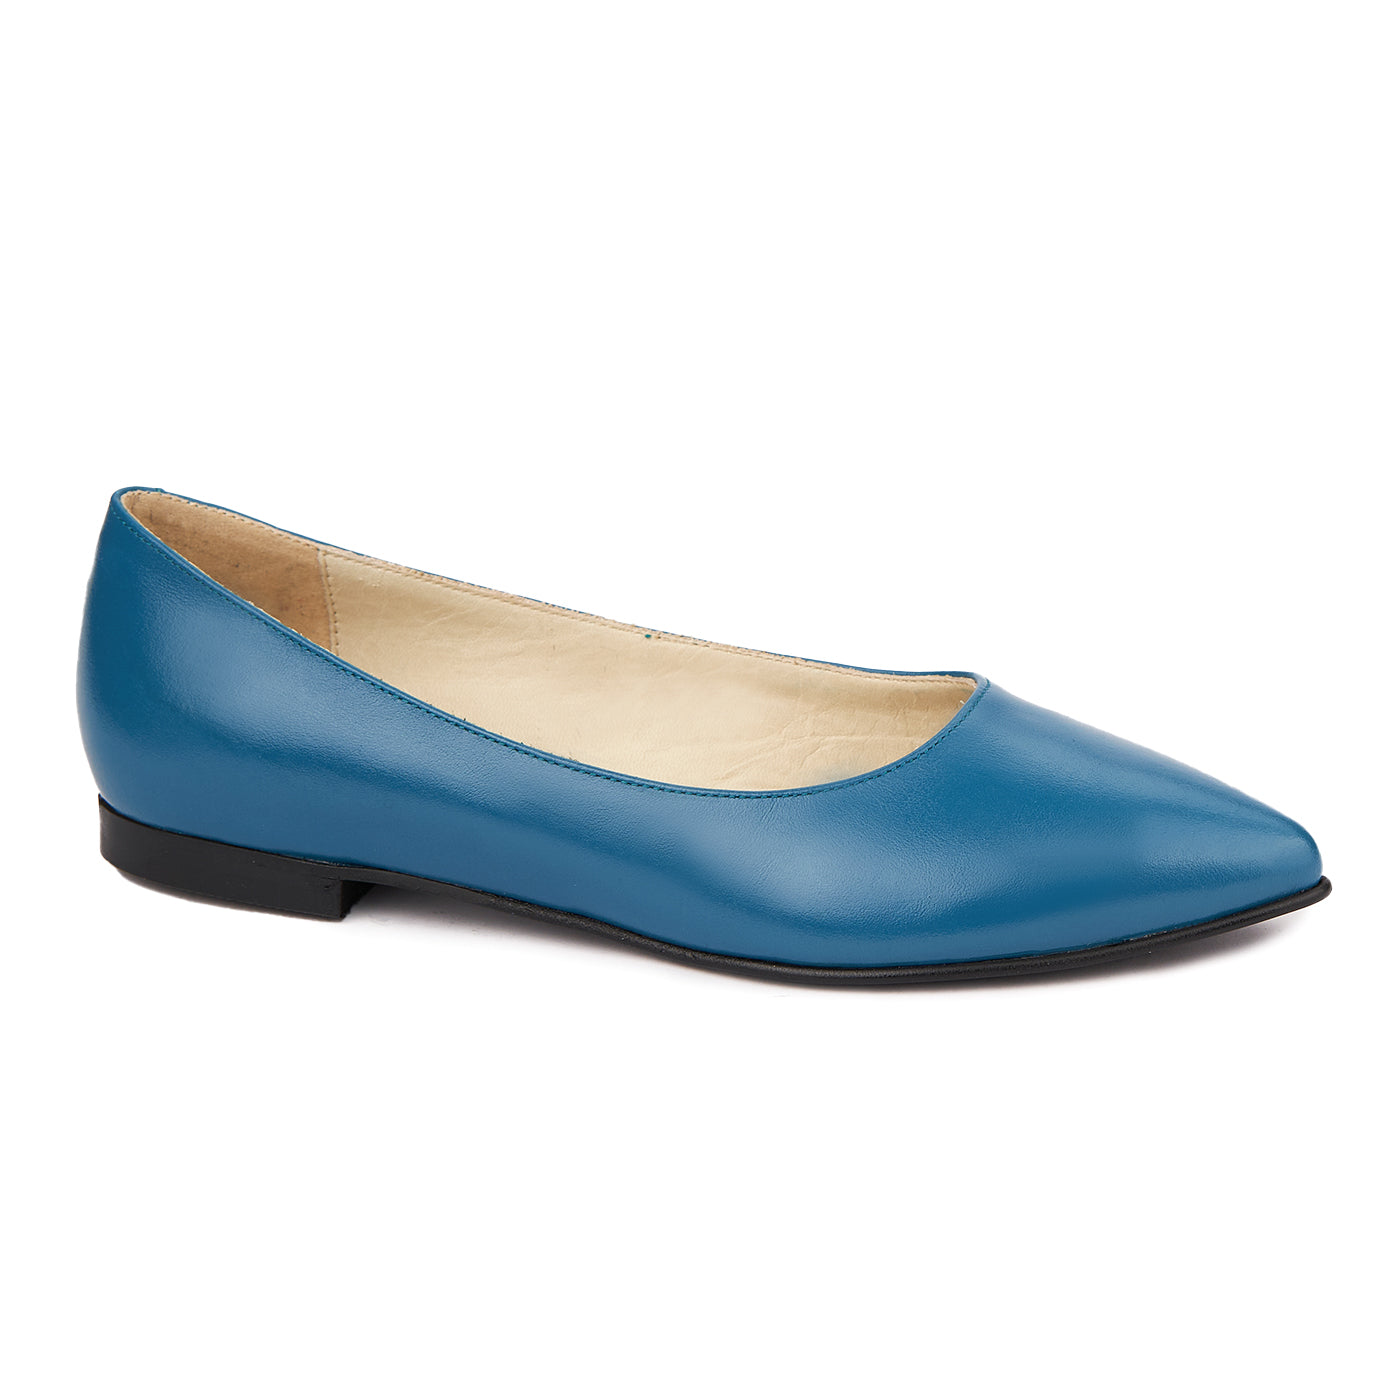 Pantofi dama din piele naturala albastra 4521